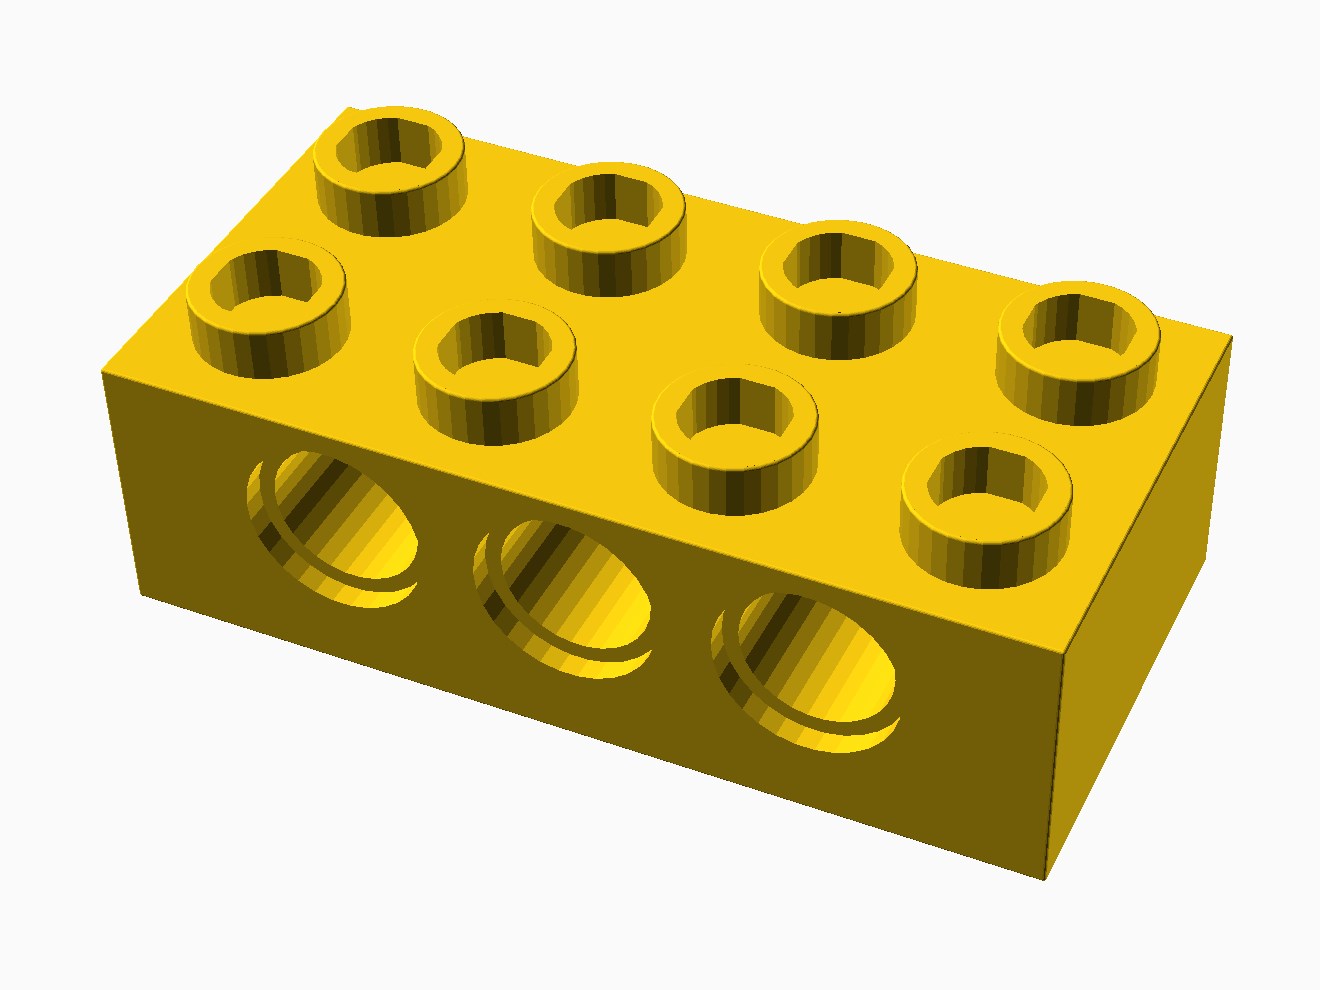 3D printable model of a LEGO Technic 4x2 Brick.